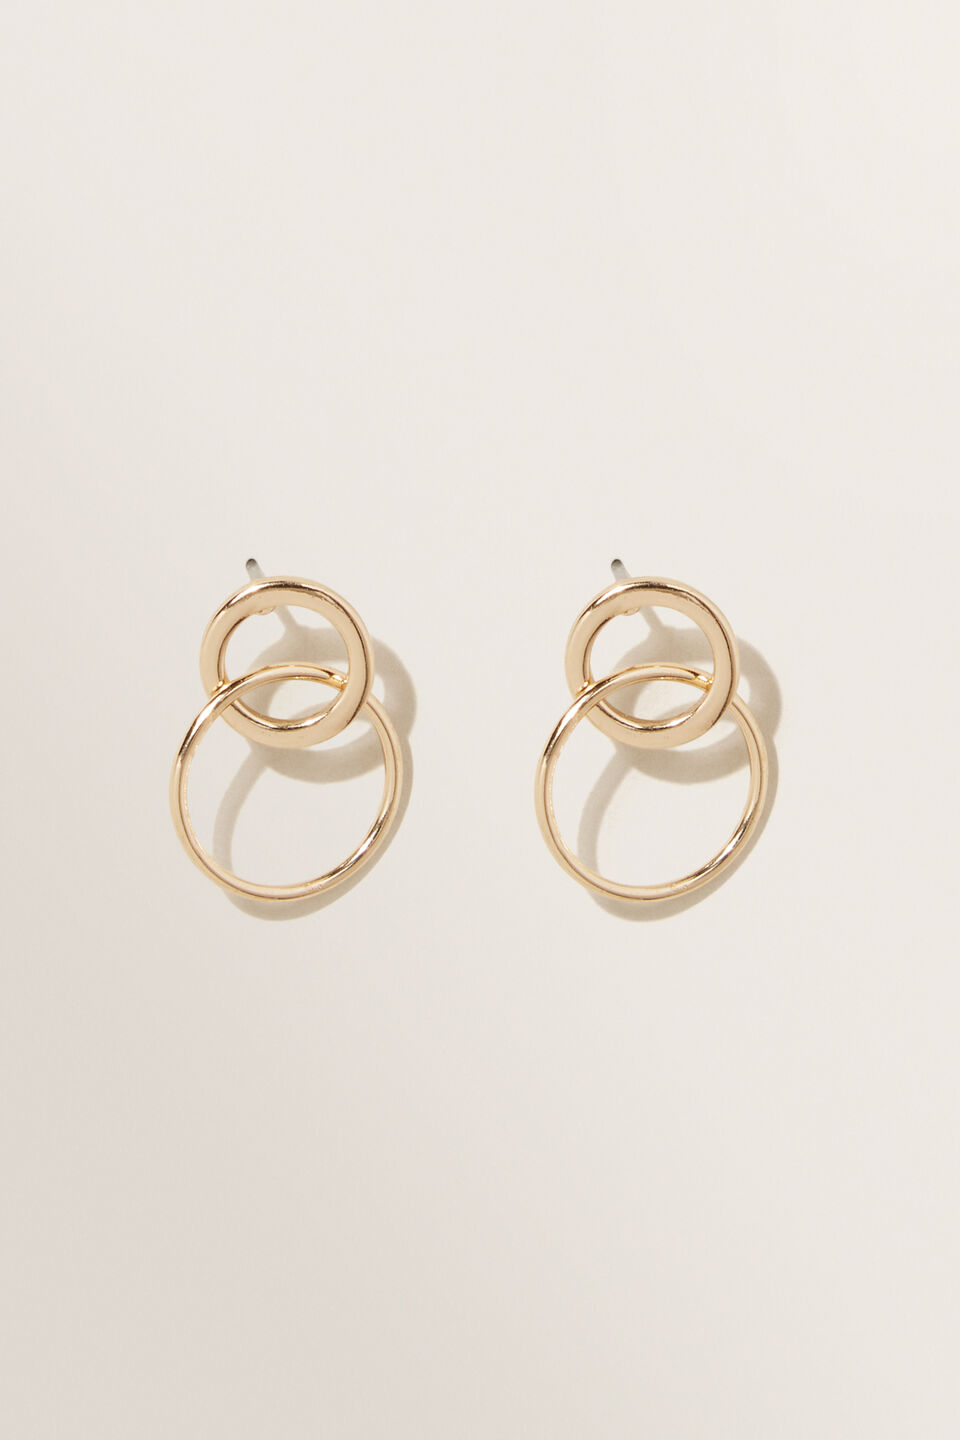 Linked Ring Earrings  Gold